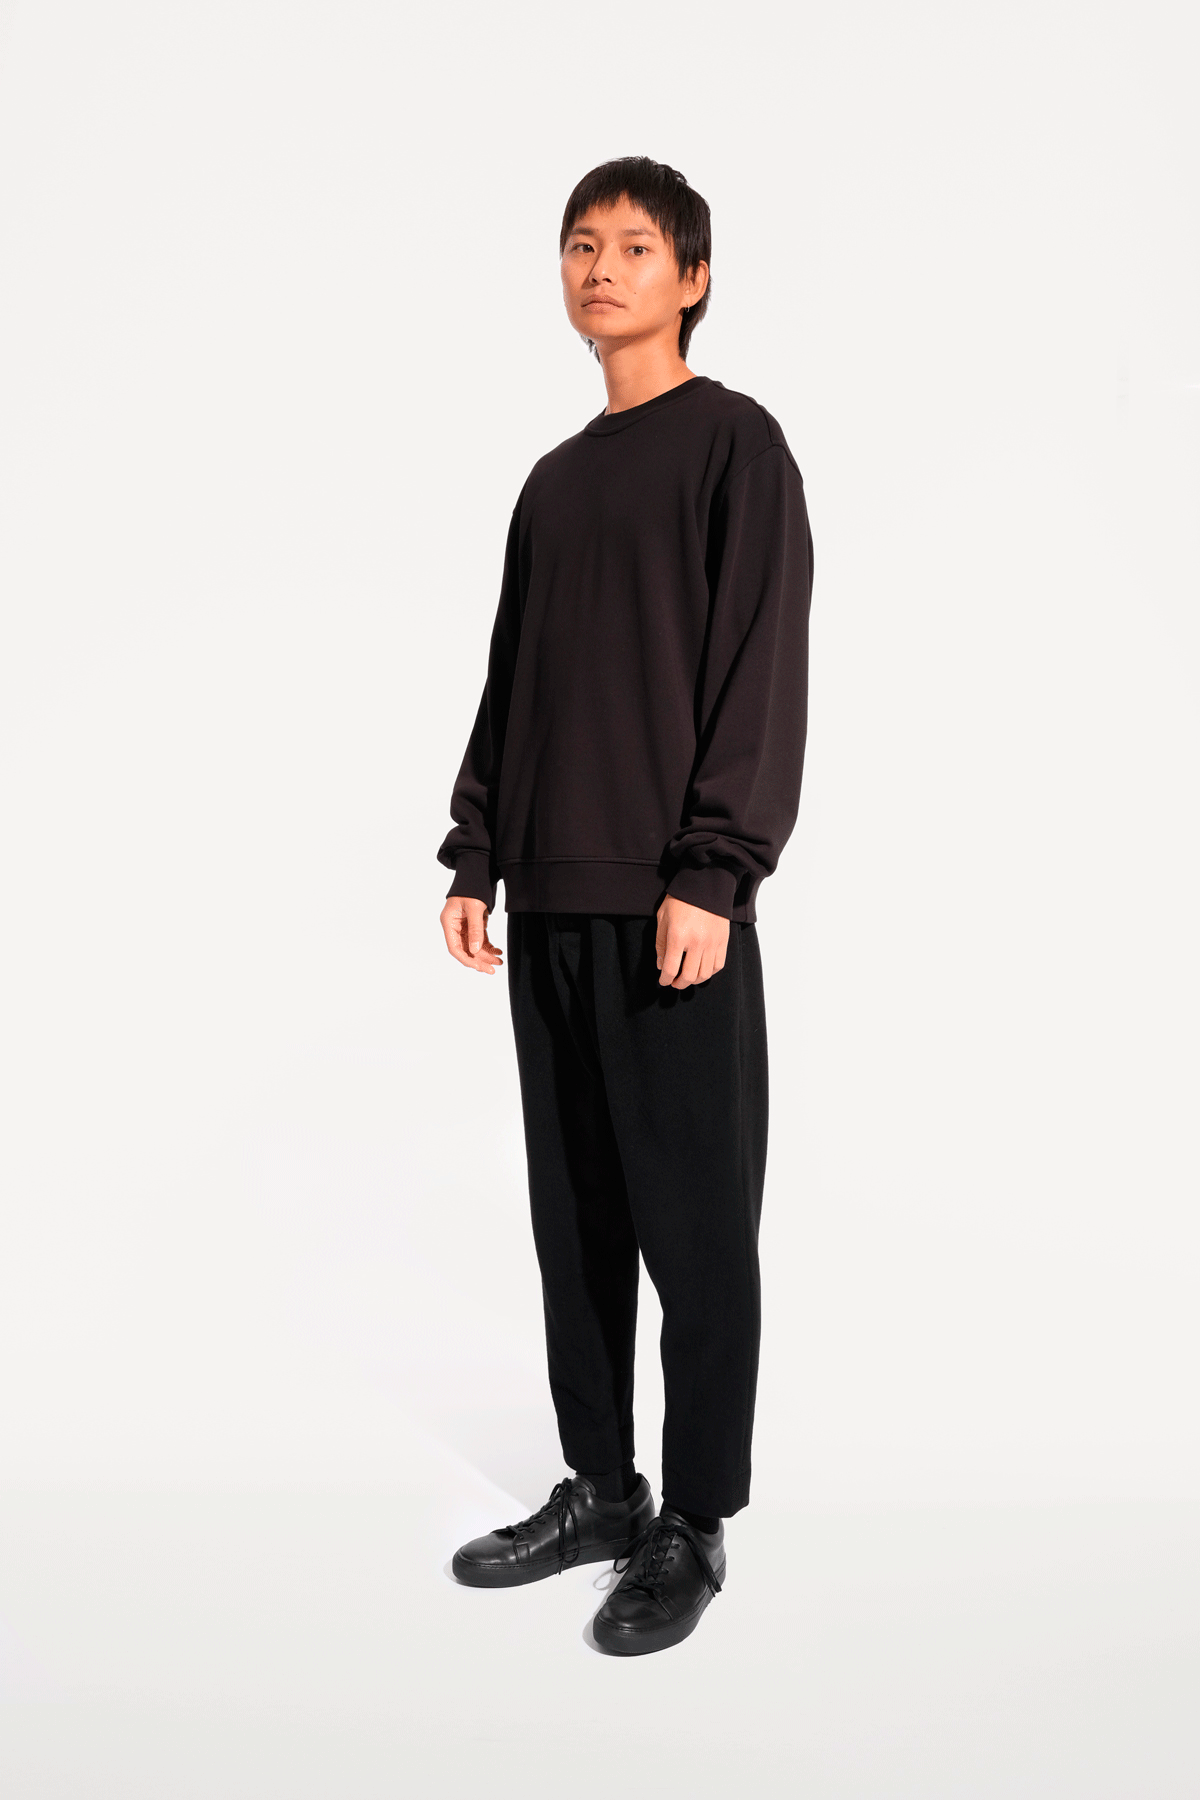 oftt - 02- reversible sweatshirt - black - organic cotton fleece - image 9